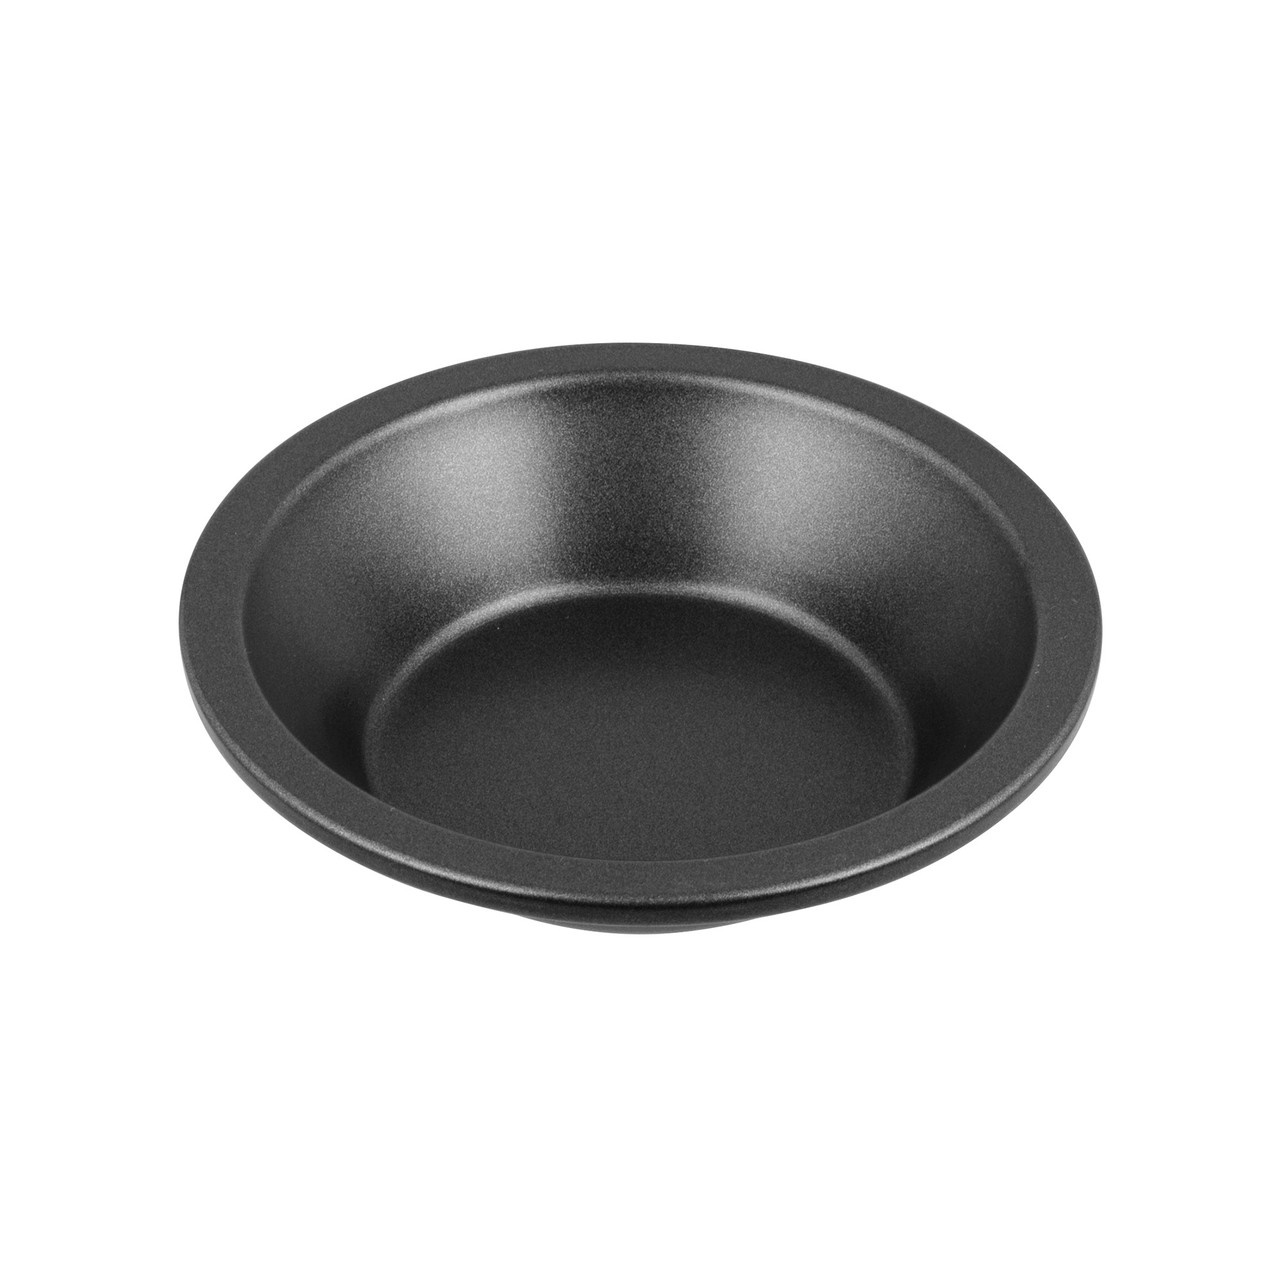 Bakemaster Round Pie Dish Set Of 4 12.5 X 3cm - Non-stick